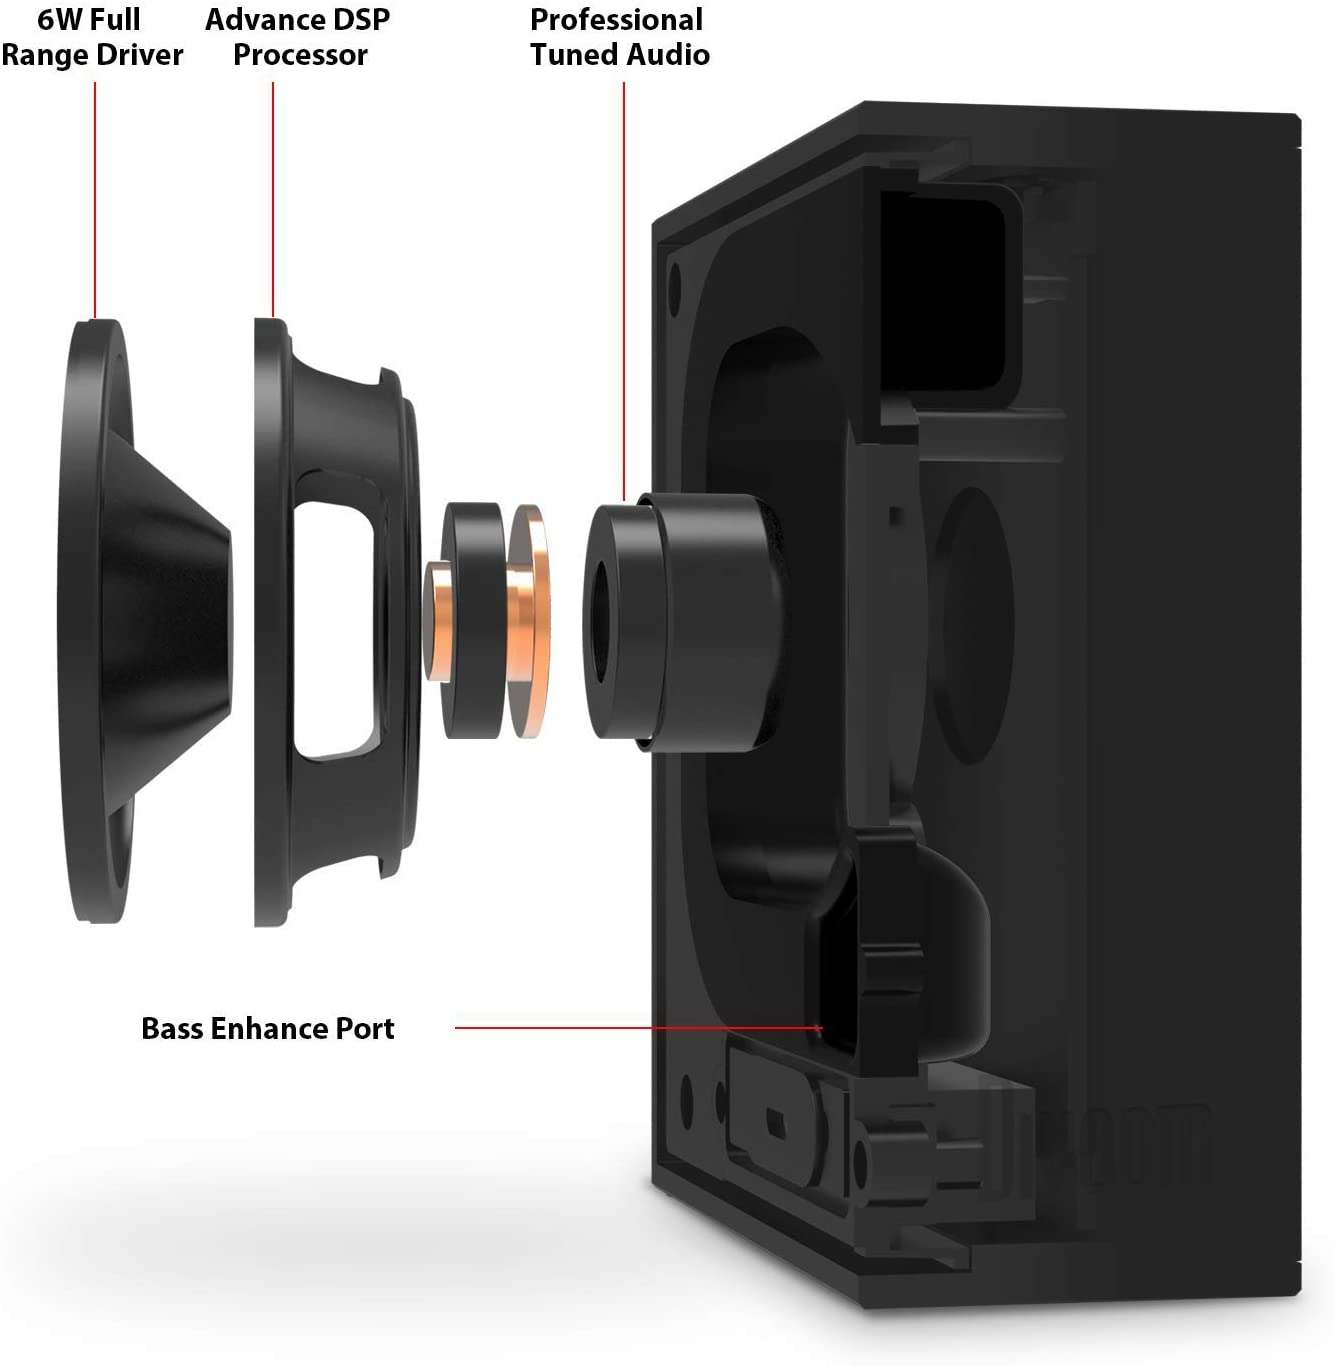 Divoom Timebox Evo Pixel Art Smart Bluetooth Speaker Black